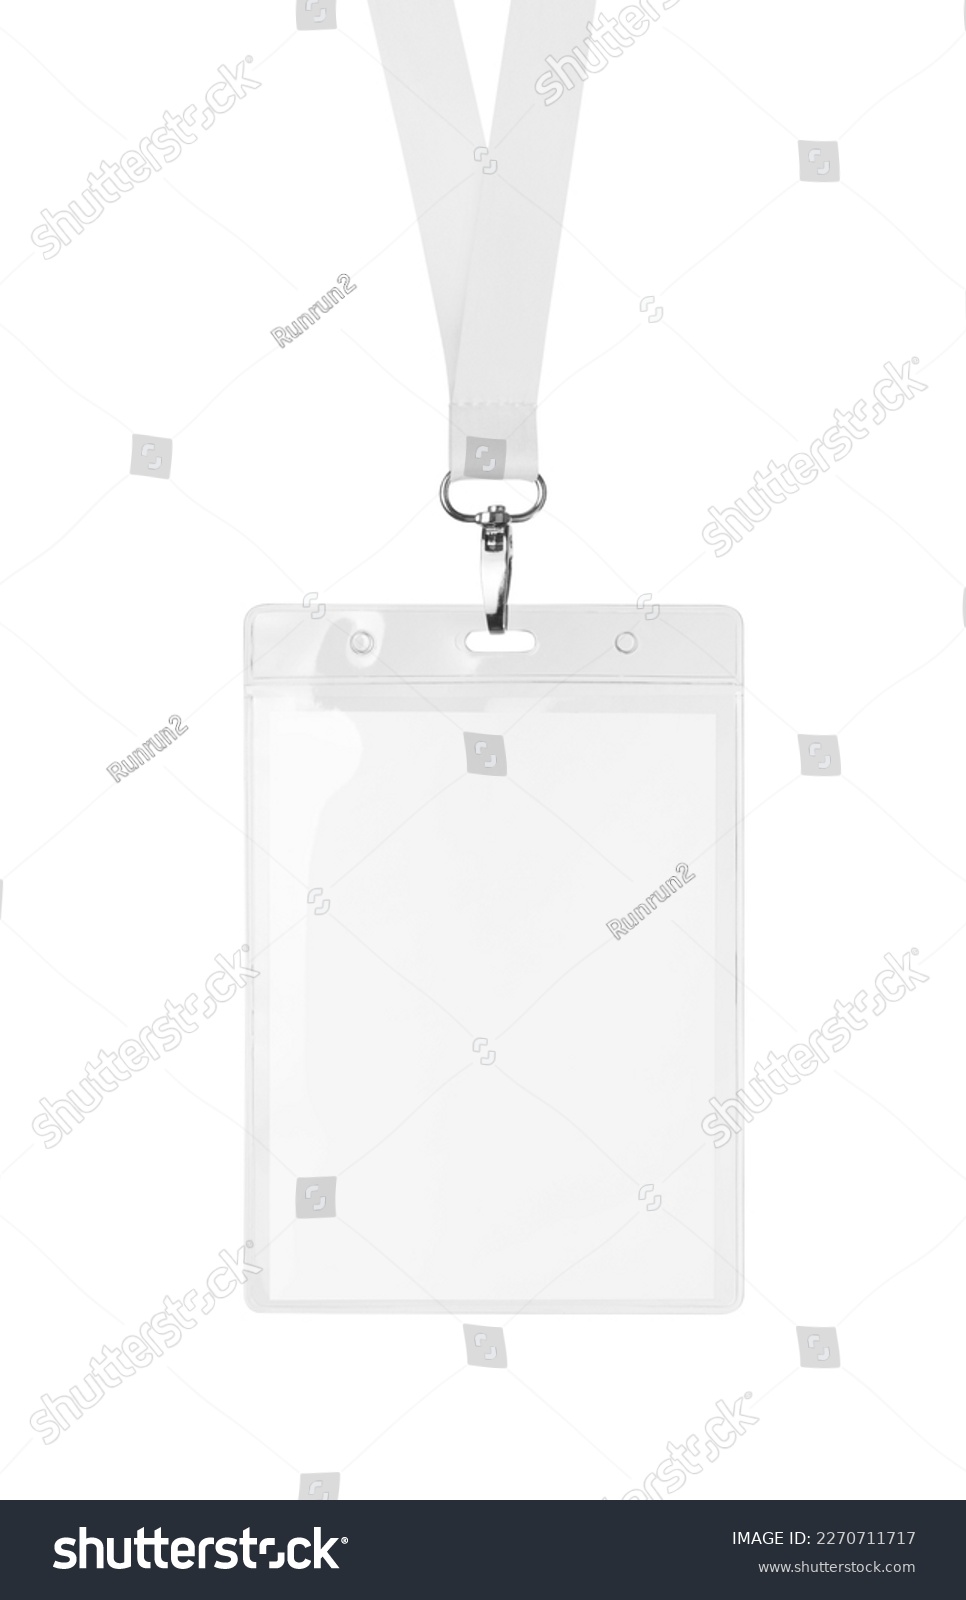 Transparent badge mockup isolated on white background. Plain empty name tag mock up with white string. #2270711717